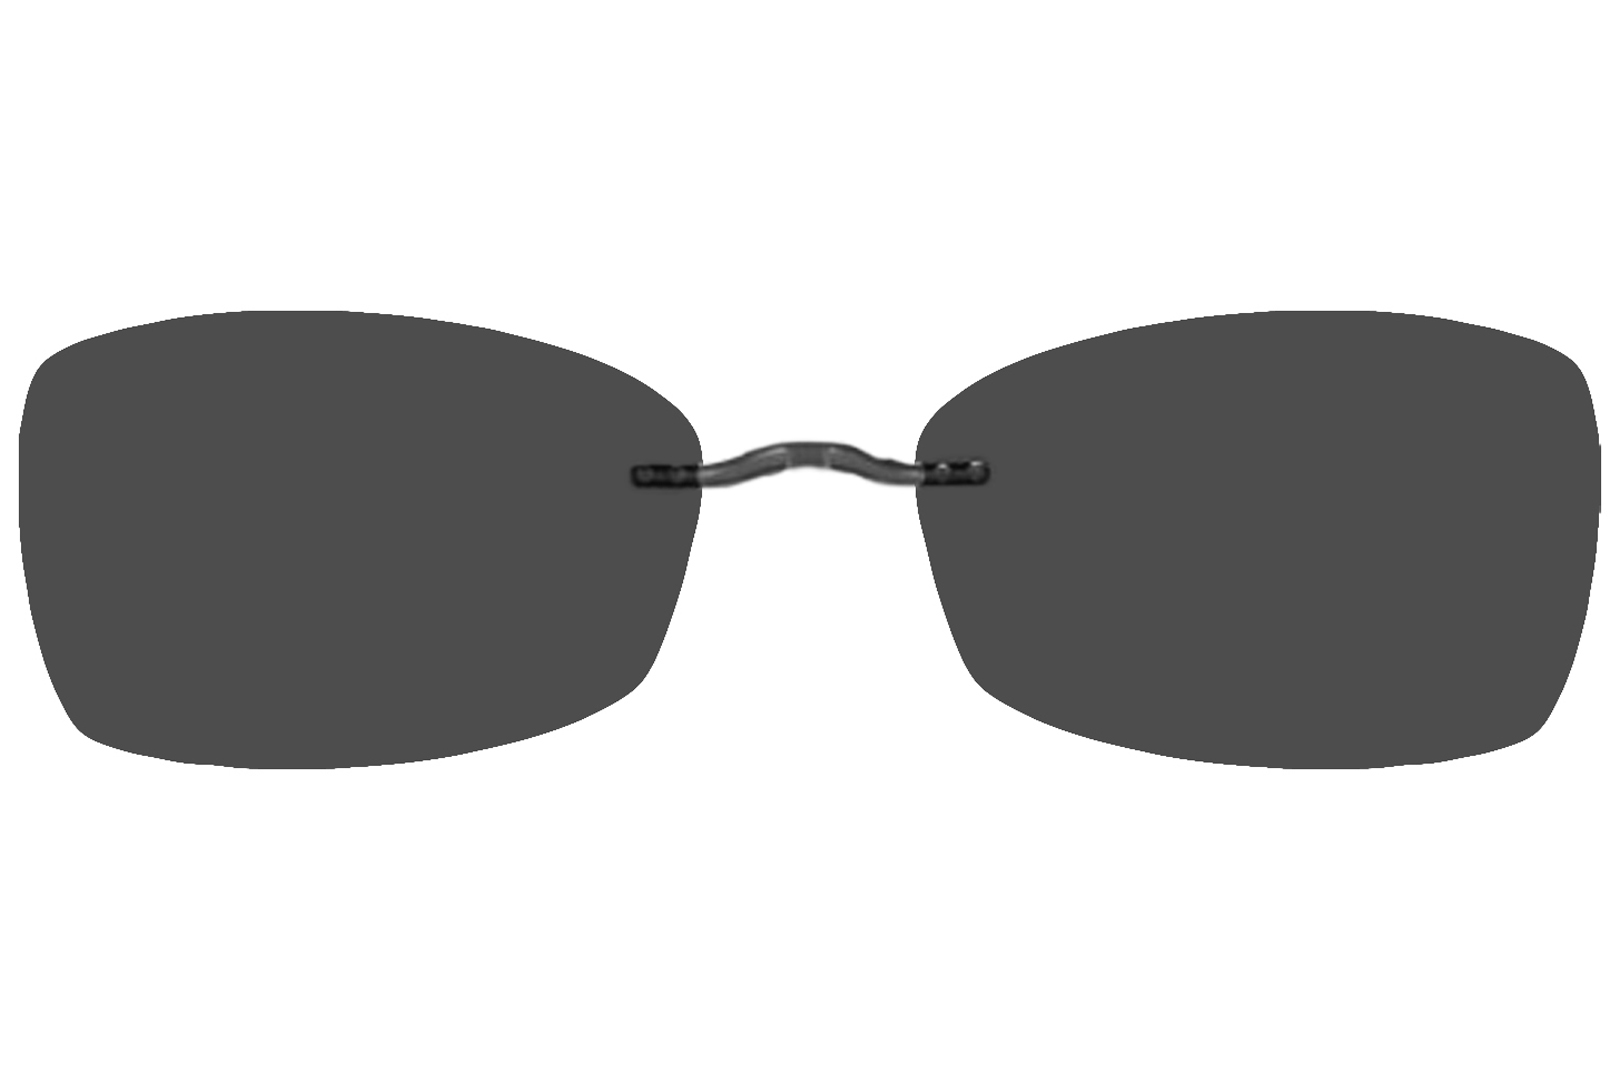 Details more than 86 silhouette clip on sunglasses best - mncb.edu.vn